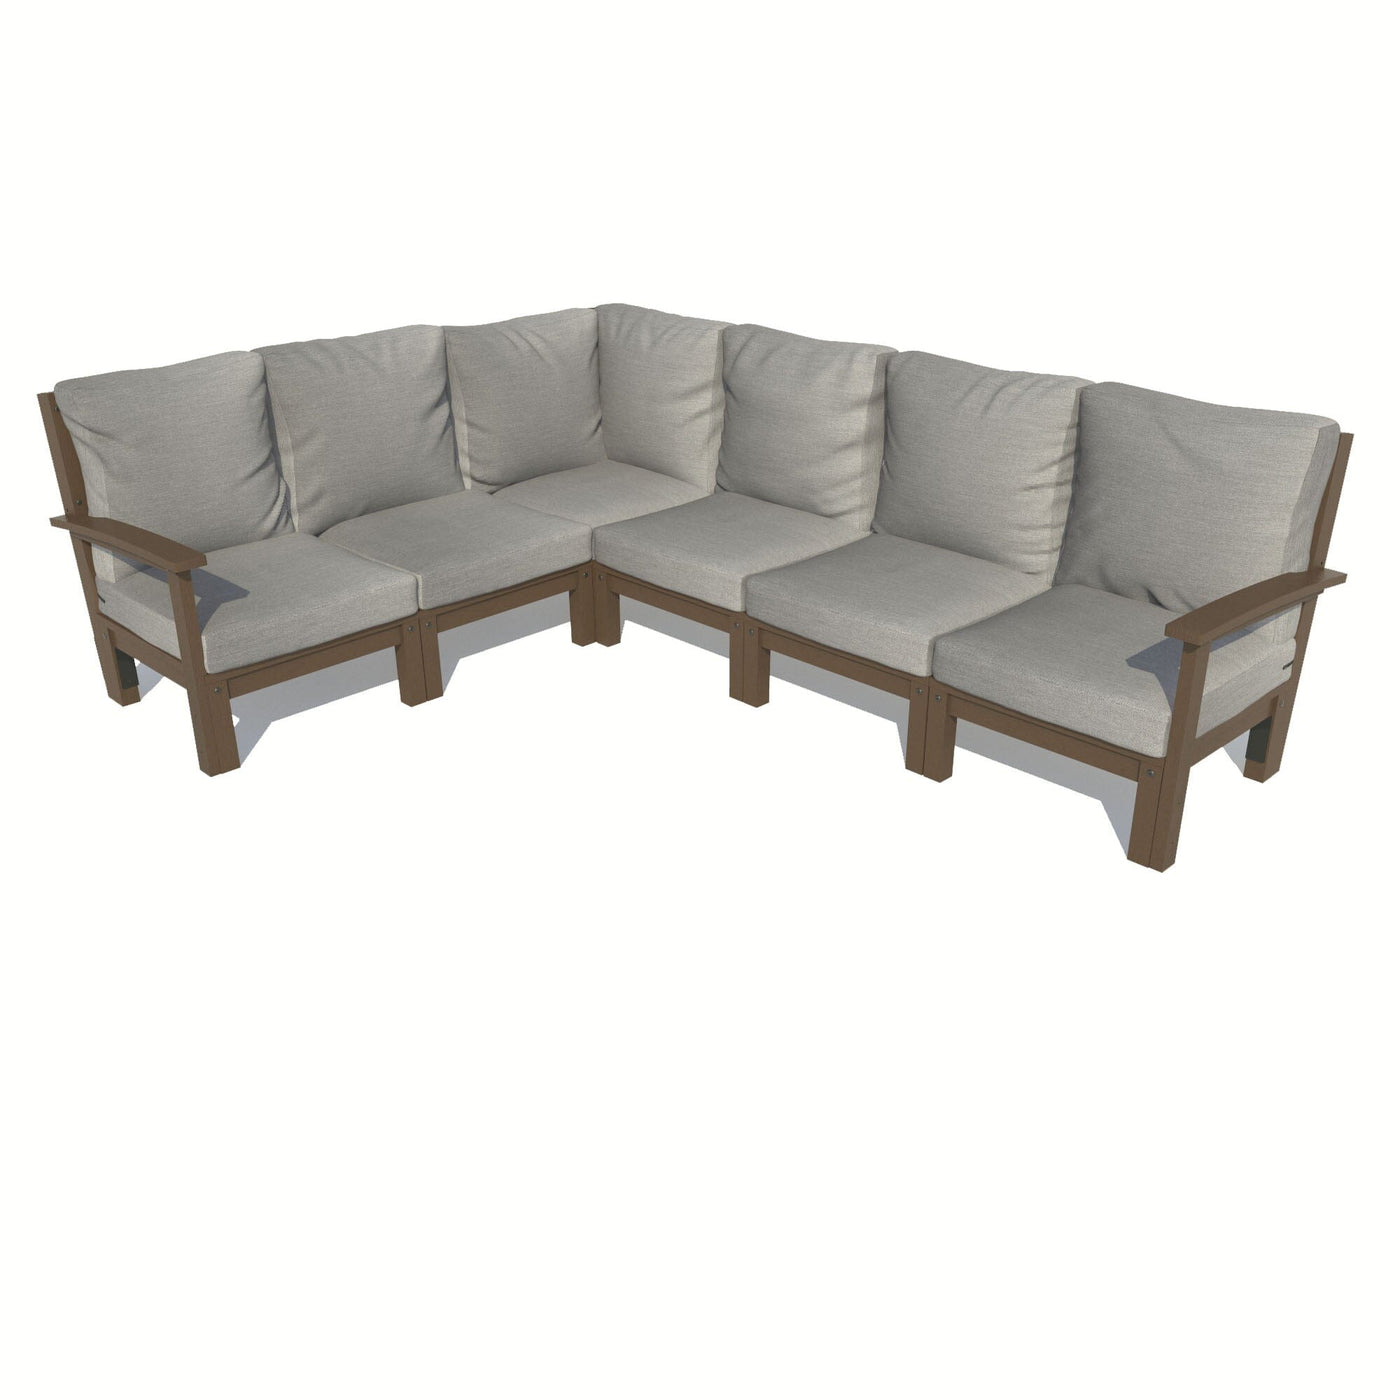 Bespoke Deep Seating: 6 Piece Sectional Sofa Set Deep Seating Highwood USA Stone Gray Weathered Acorn 